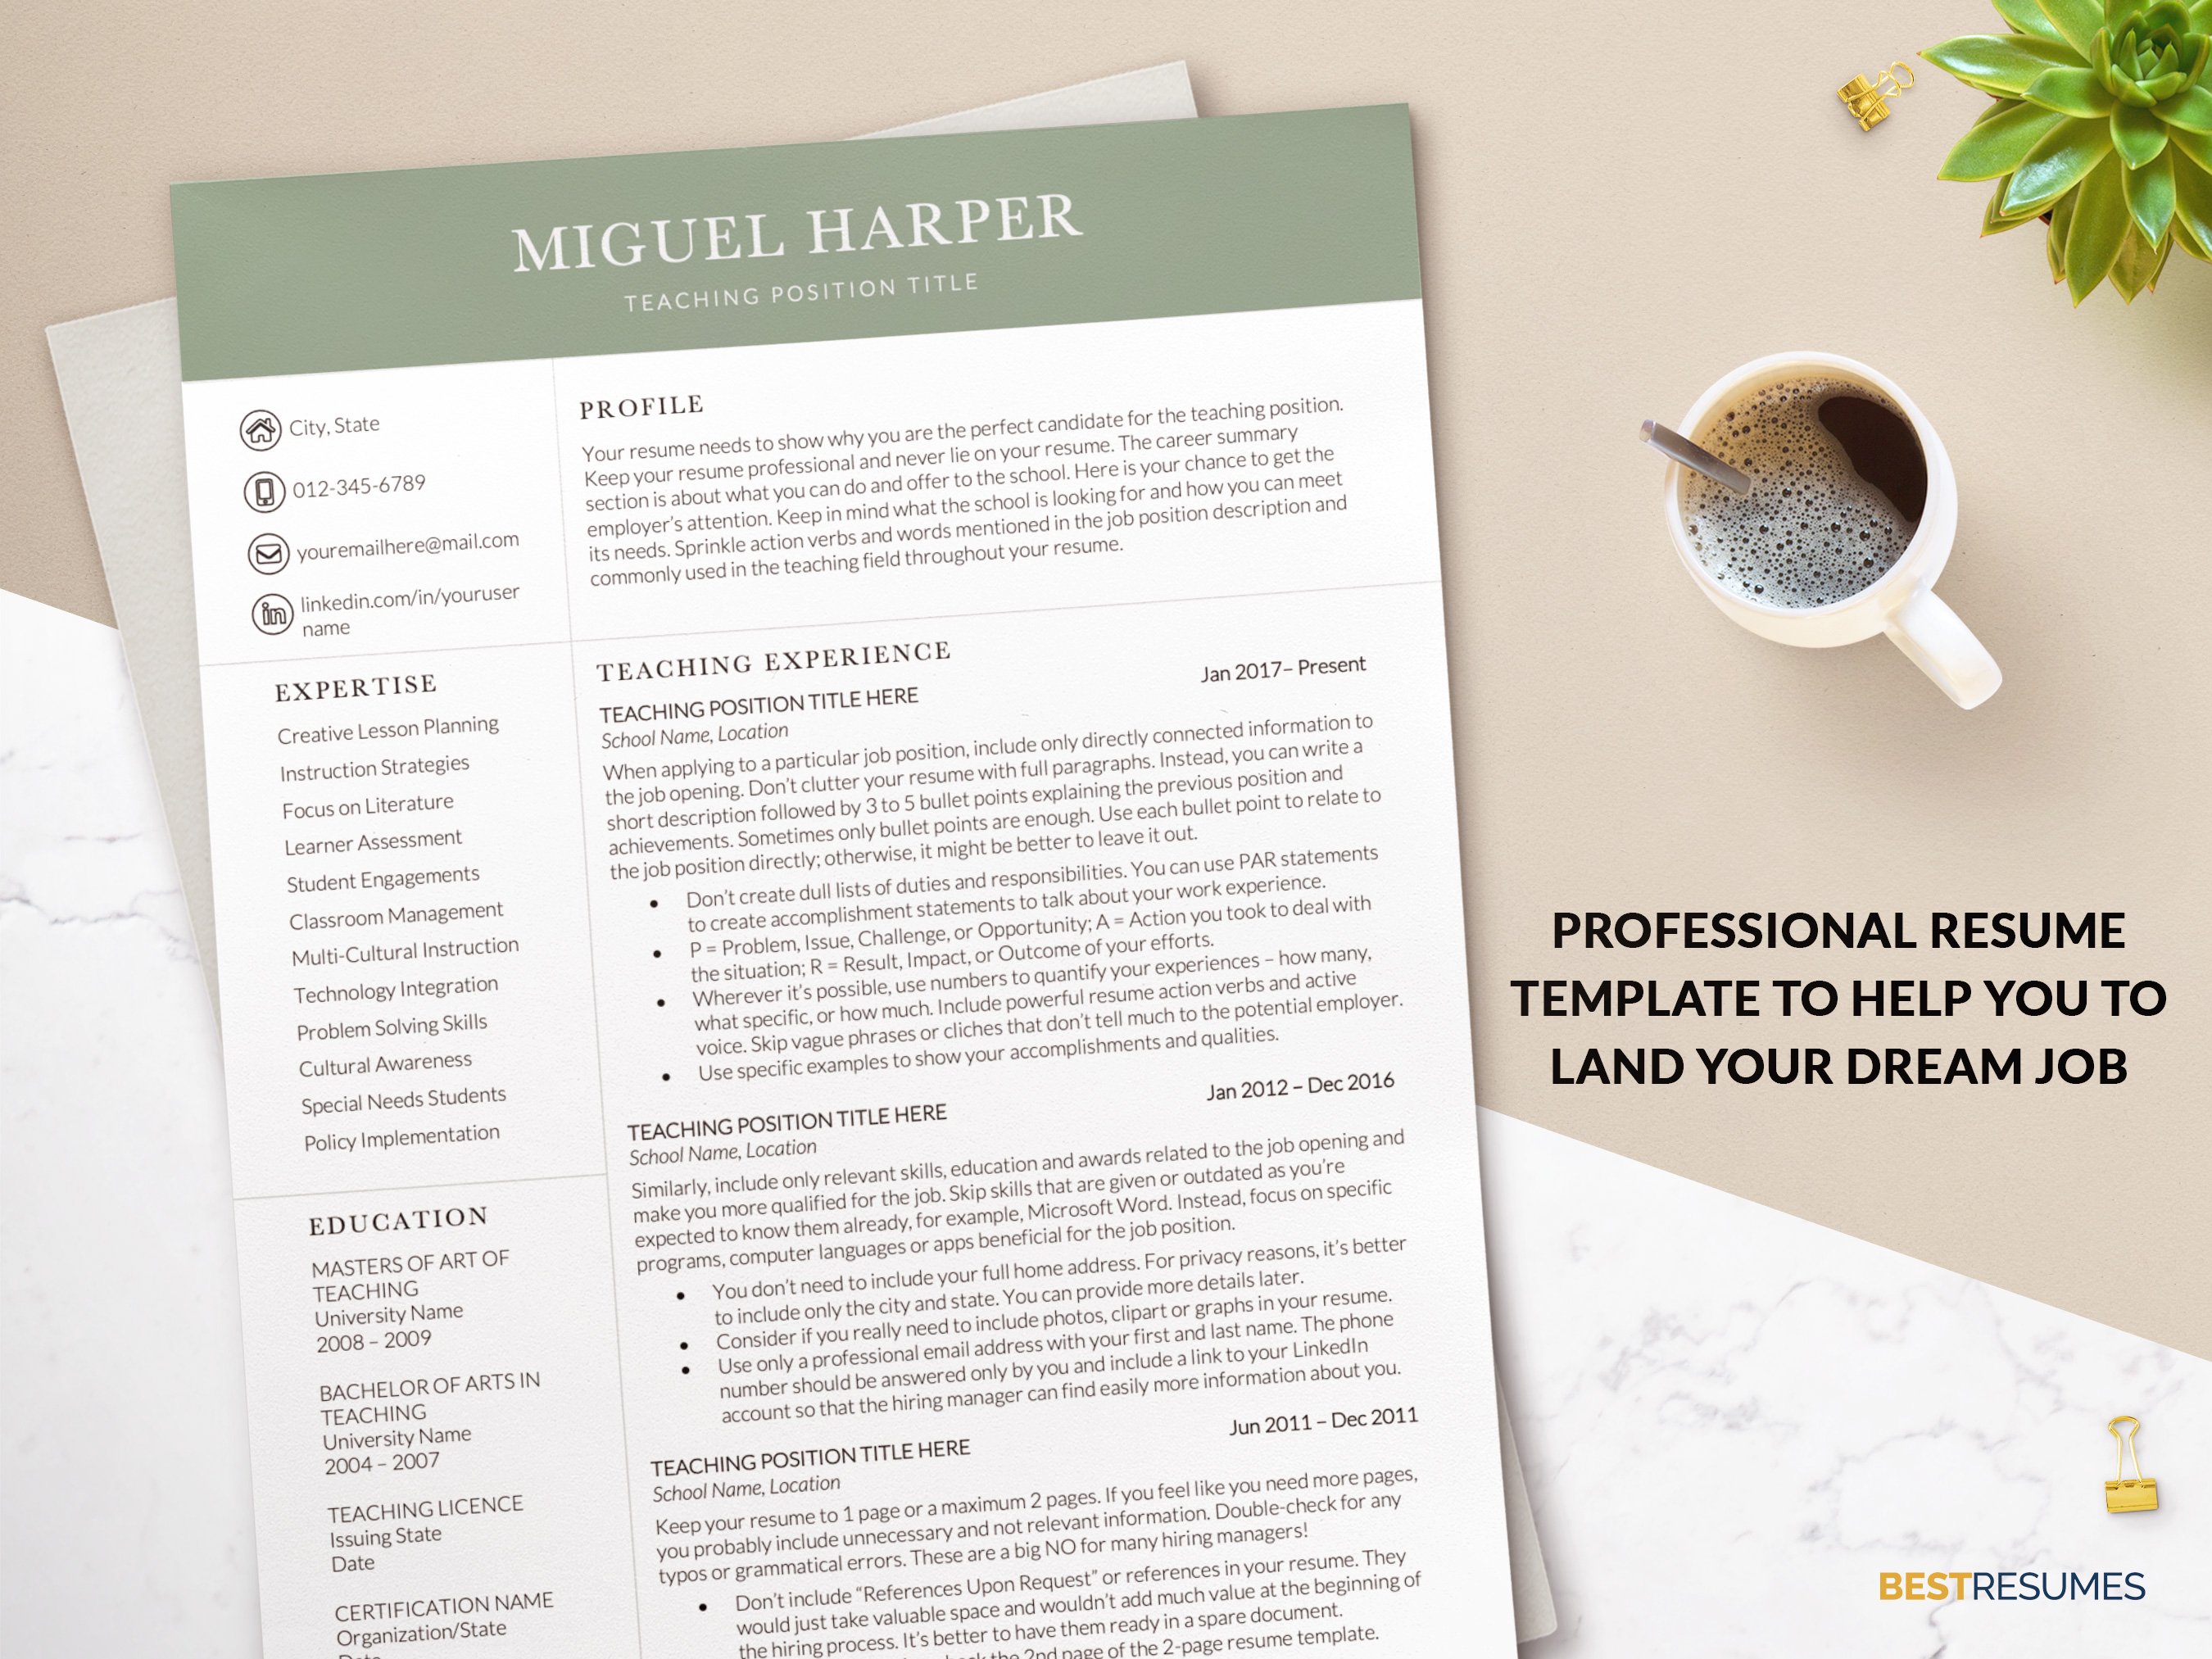 experienced teacher resume template professional resume miguel harper 655